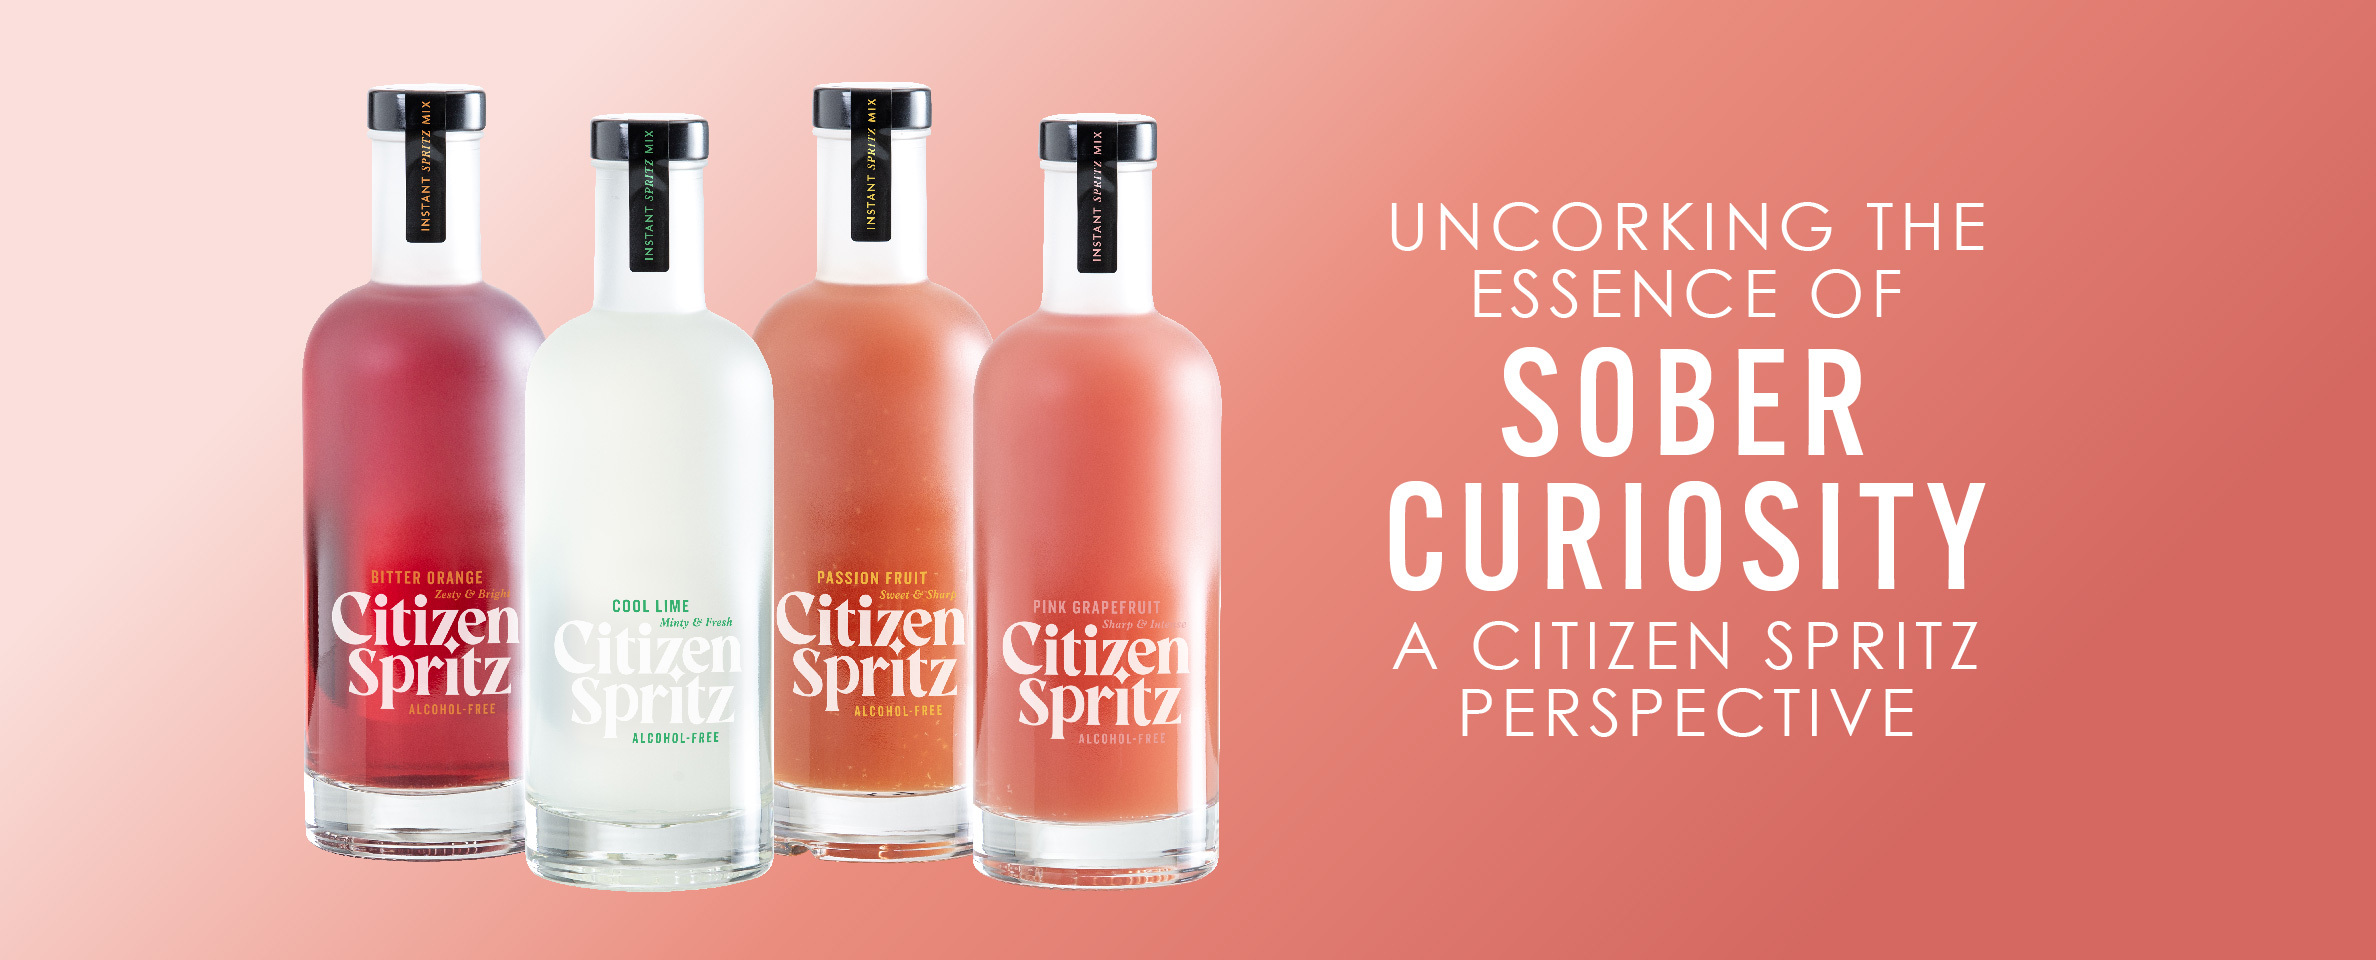 unlocking the essence of sober curiosity a citizen spritz perspective